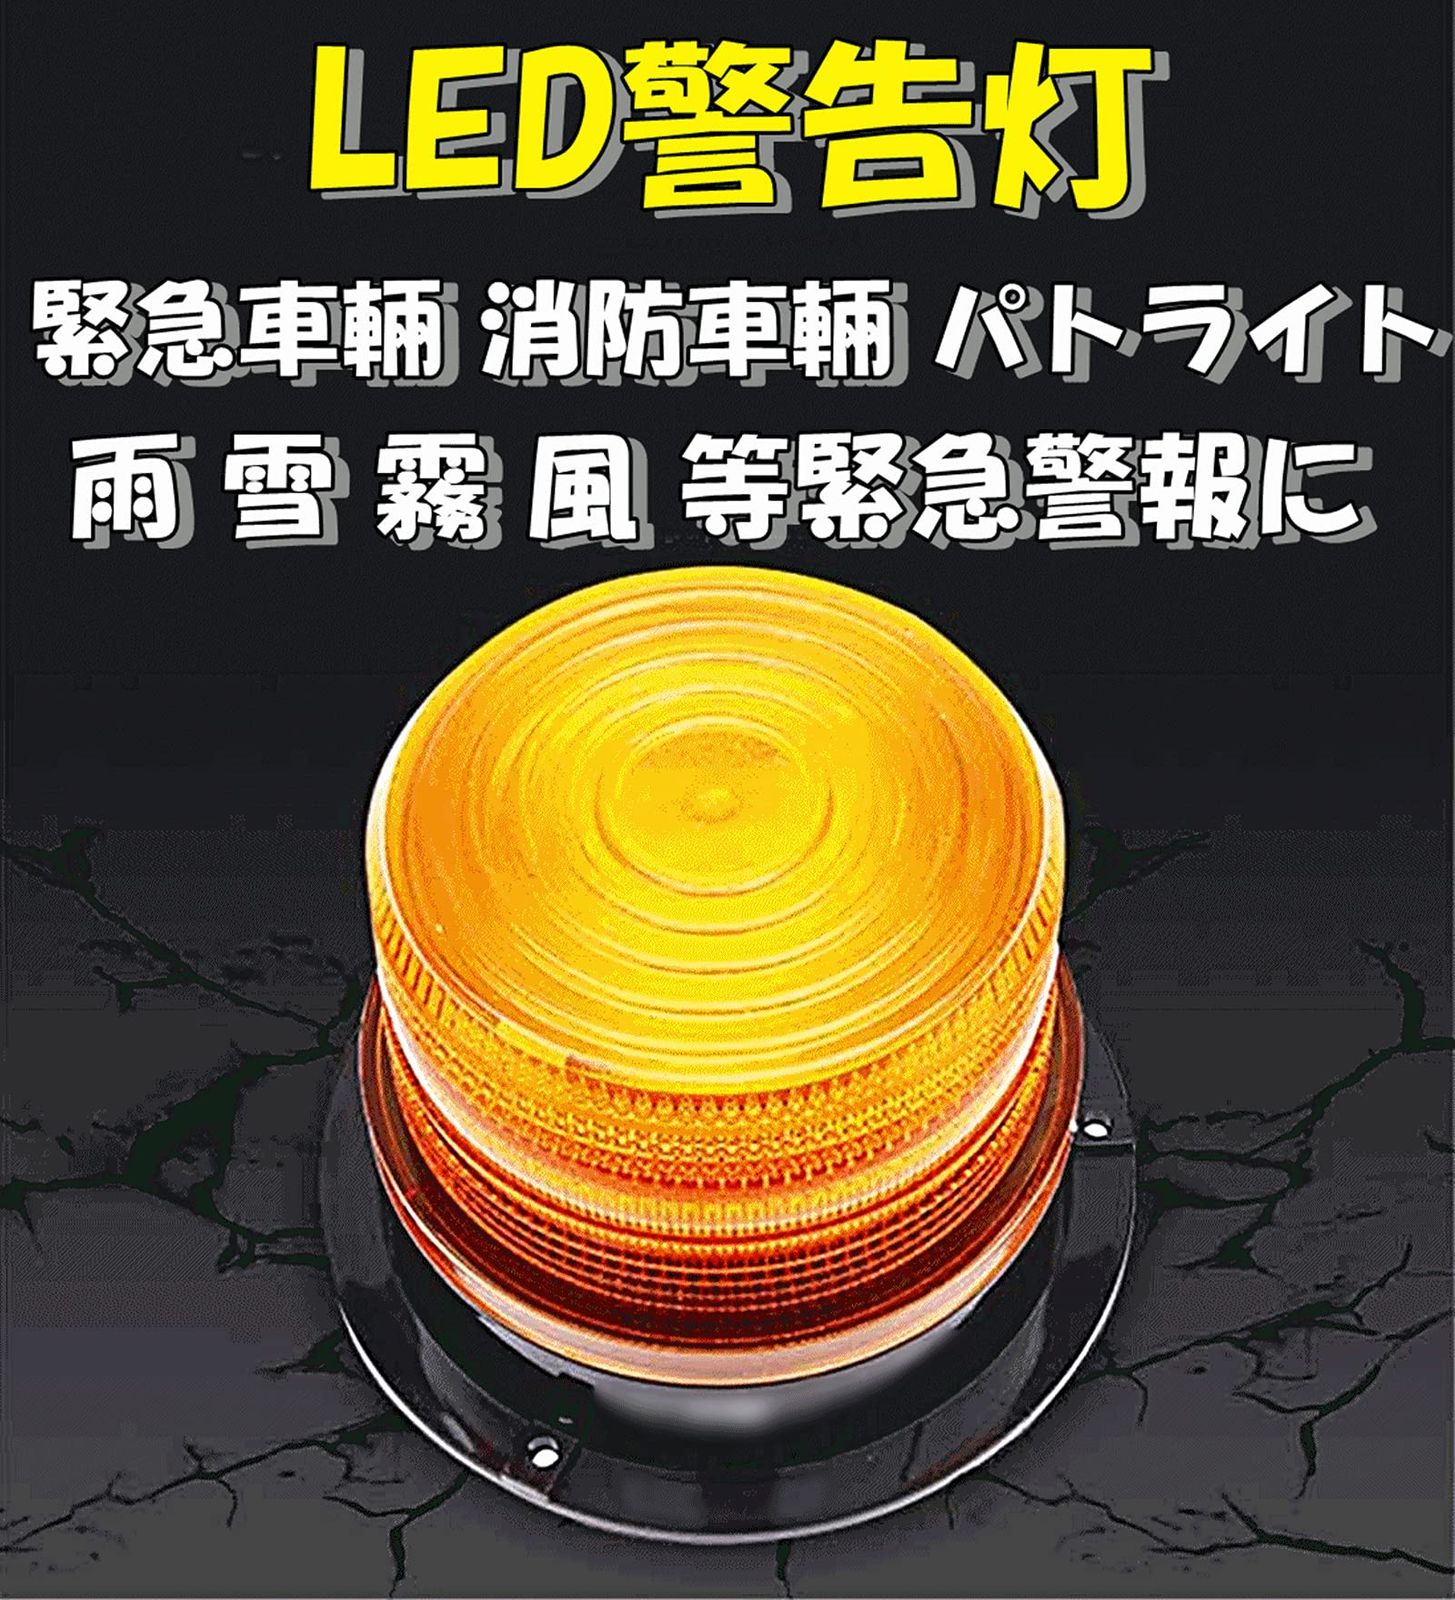 TradeWind] 警告灯 LED フラッシュライト ストロボ ライト パトランプ 非常信号灯 緊急灯 点滅可 車 バイク トラック 船舶  12/24V兼用（オレンジ） [橙オレンジ] [94mm] - メルカリ